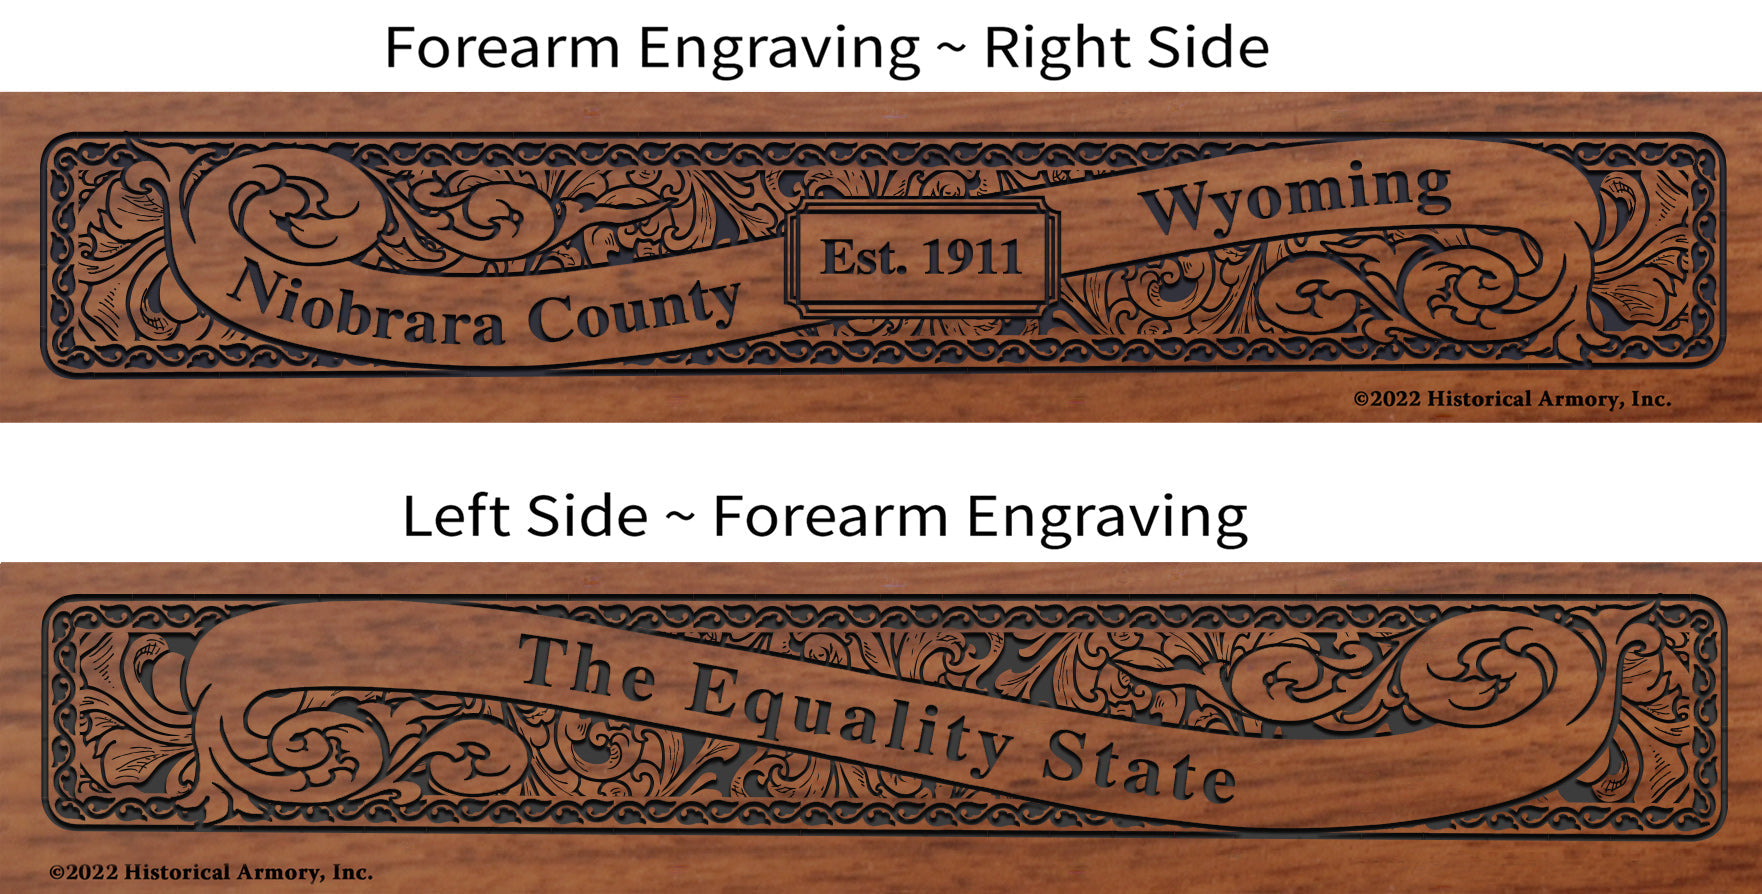 Niobrara County Wyoming Engraved Rifle Forearm